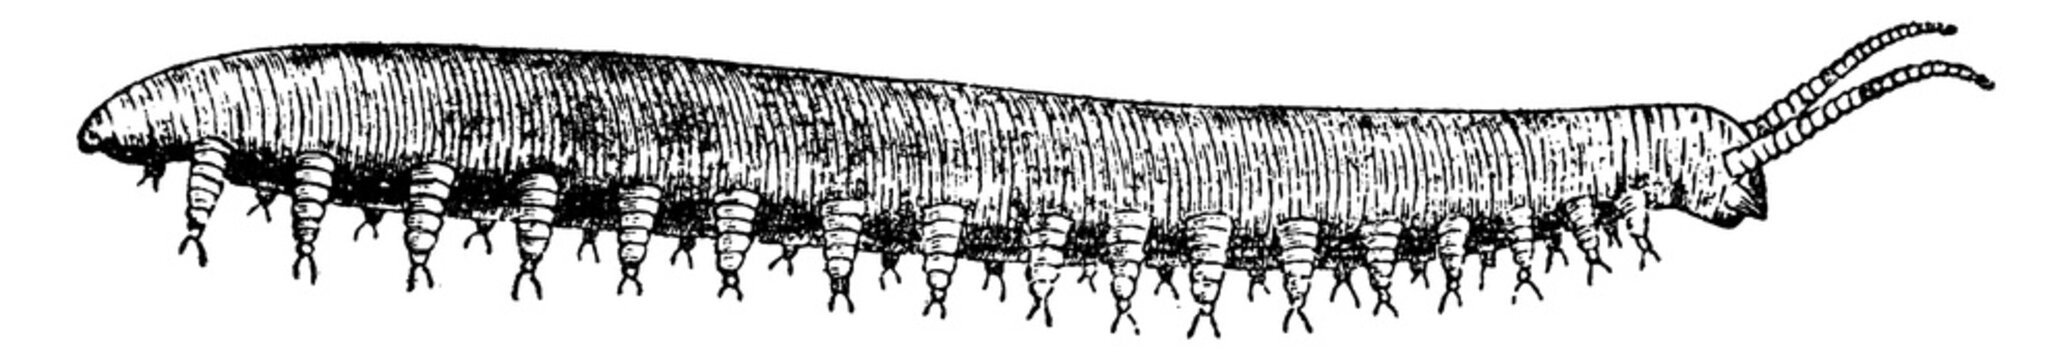 Velvet Worm, vintage illustration.